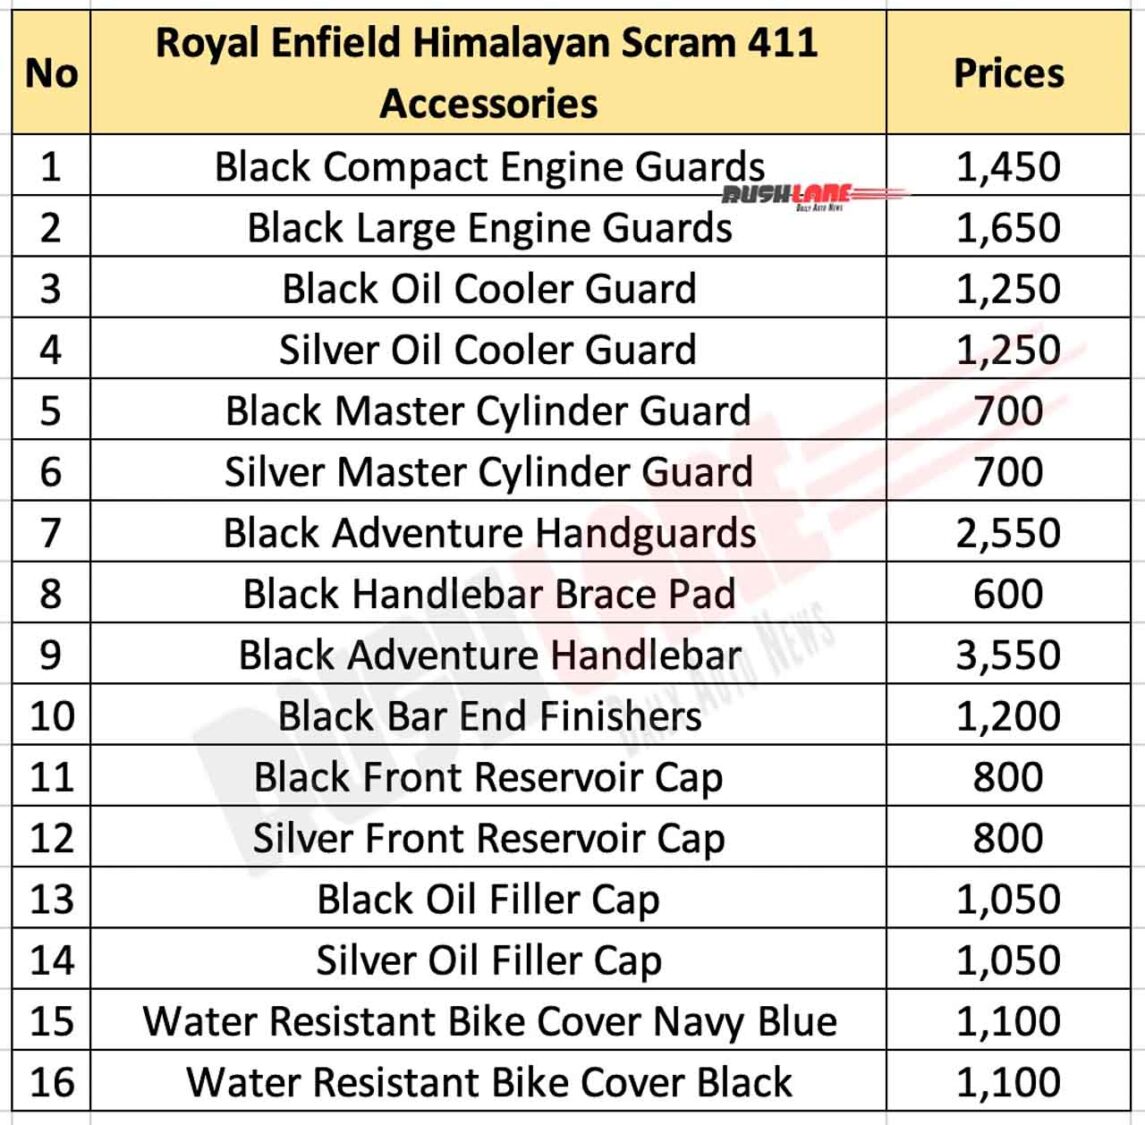 Royal Enfield Himalayan Scram 411 Accessories